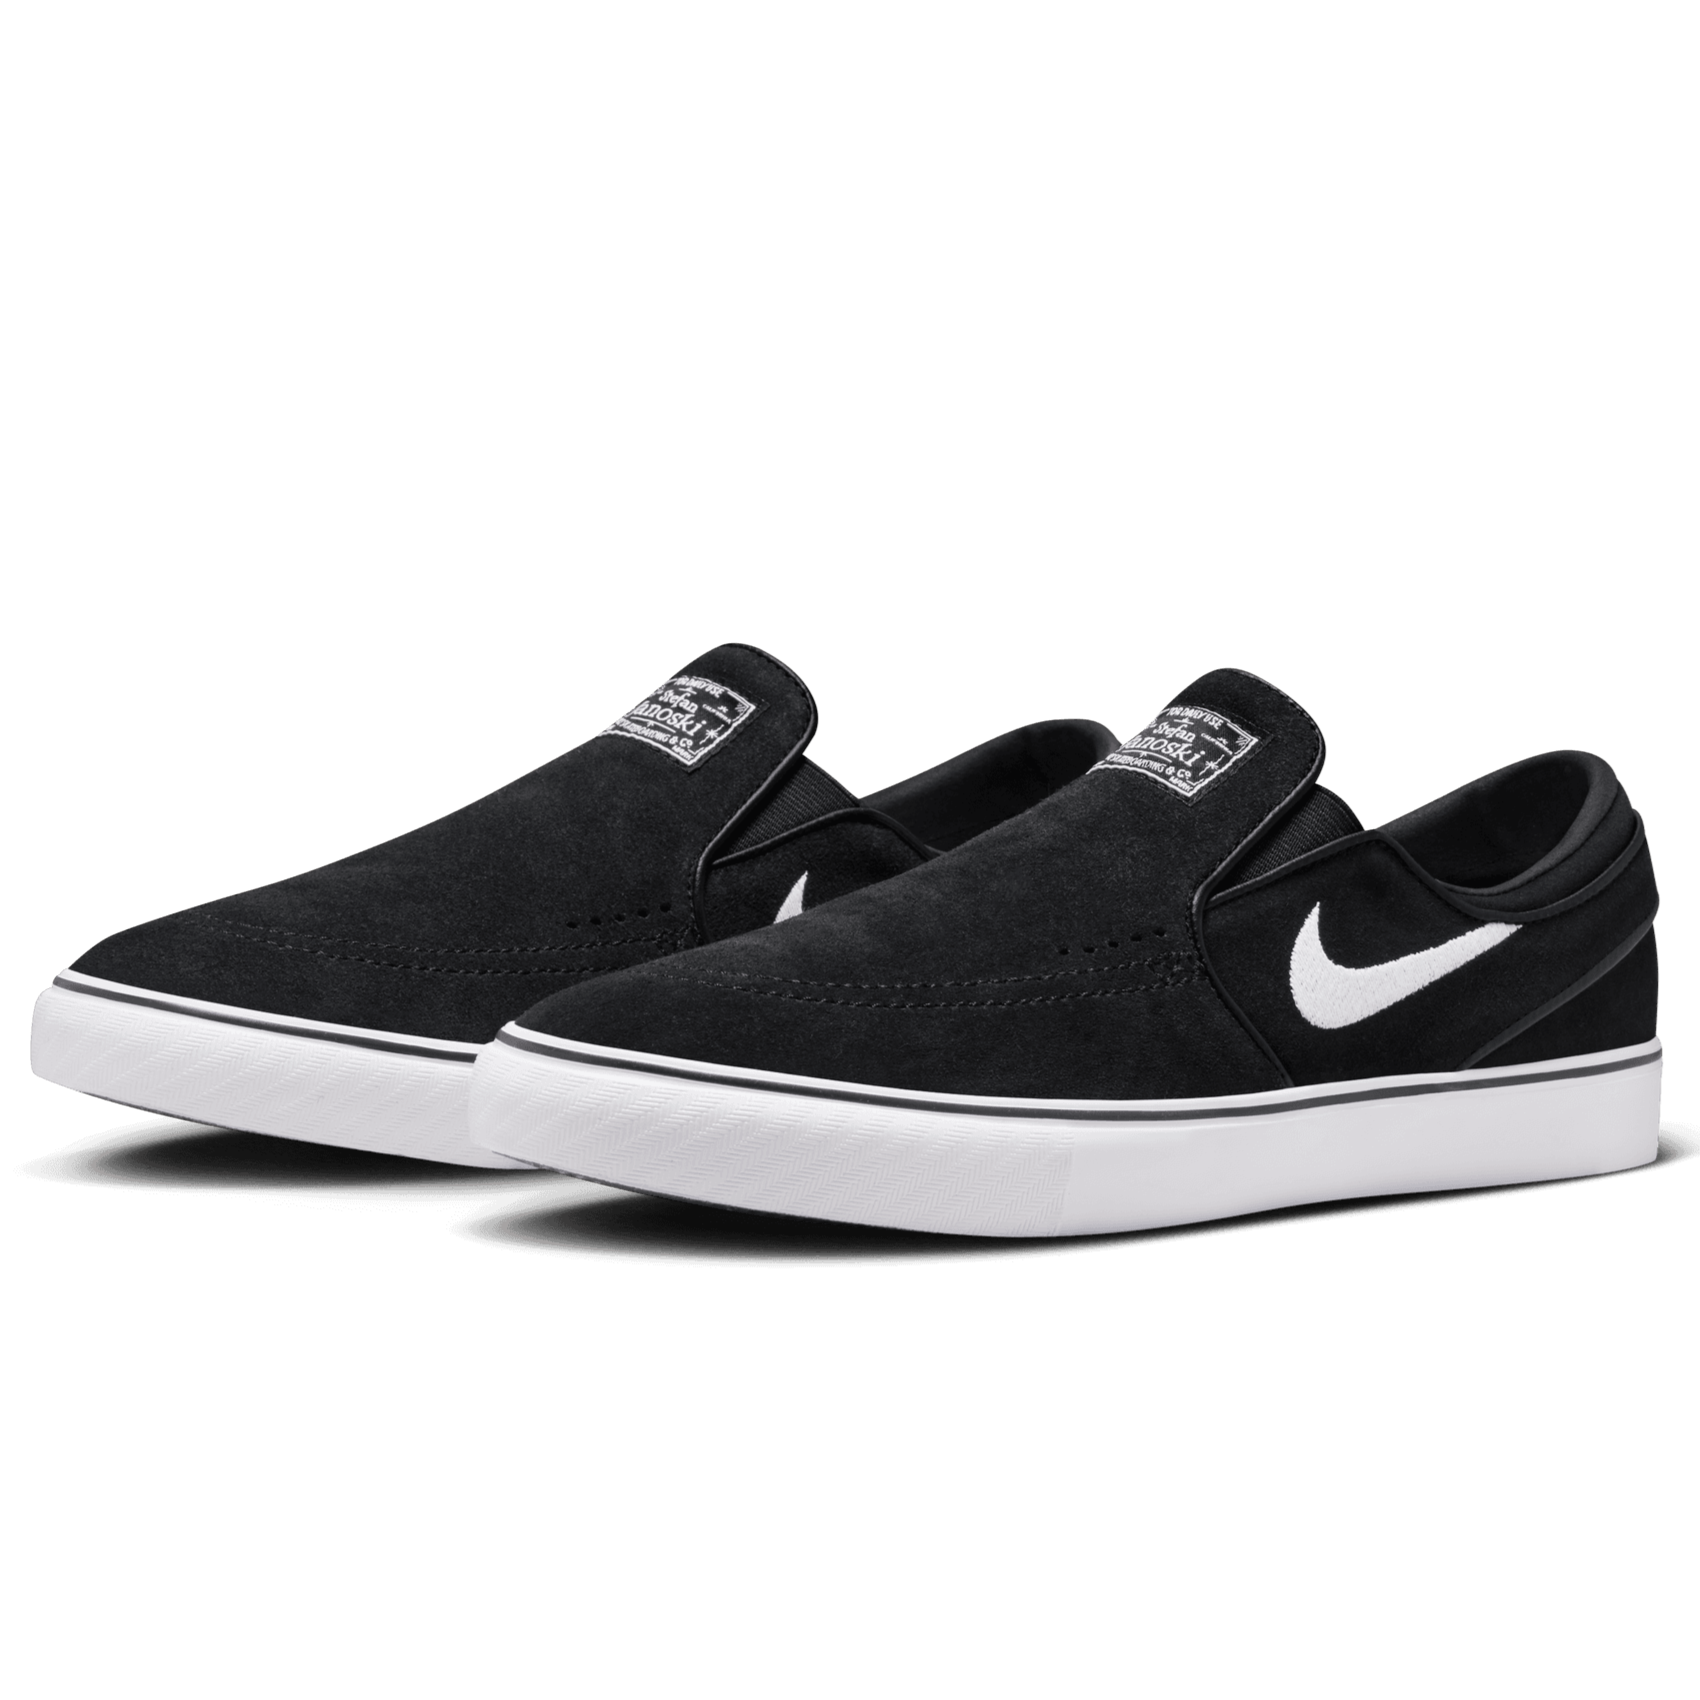 Black/White Janoski+ Nike SB Slip On Shoe Front